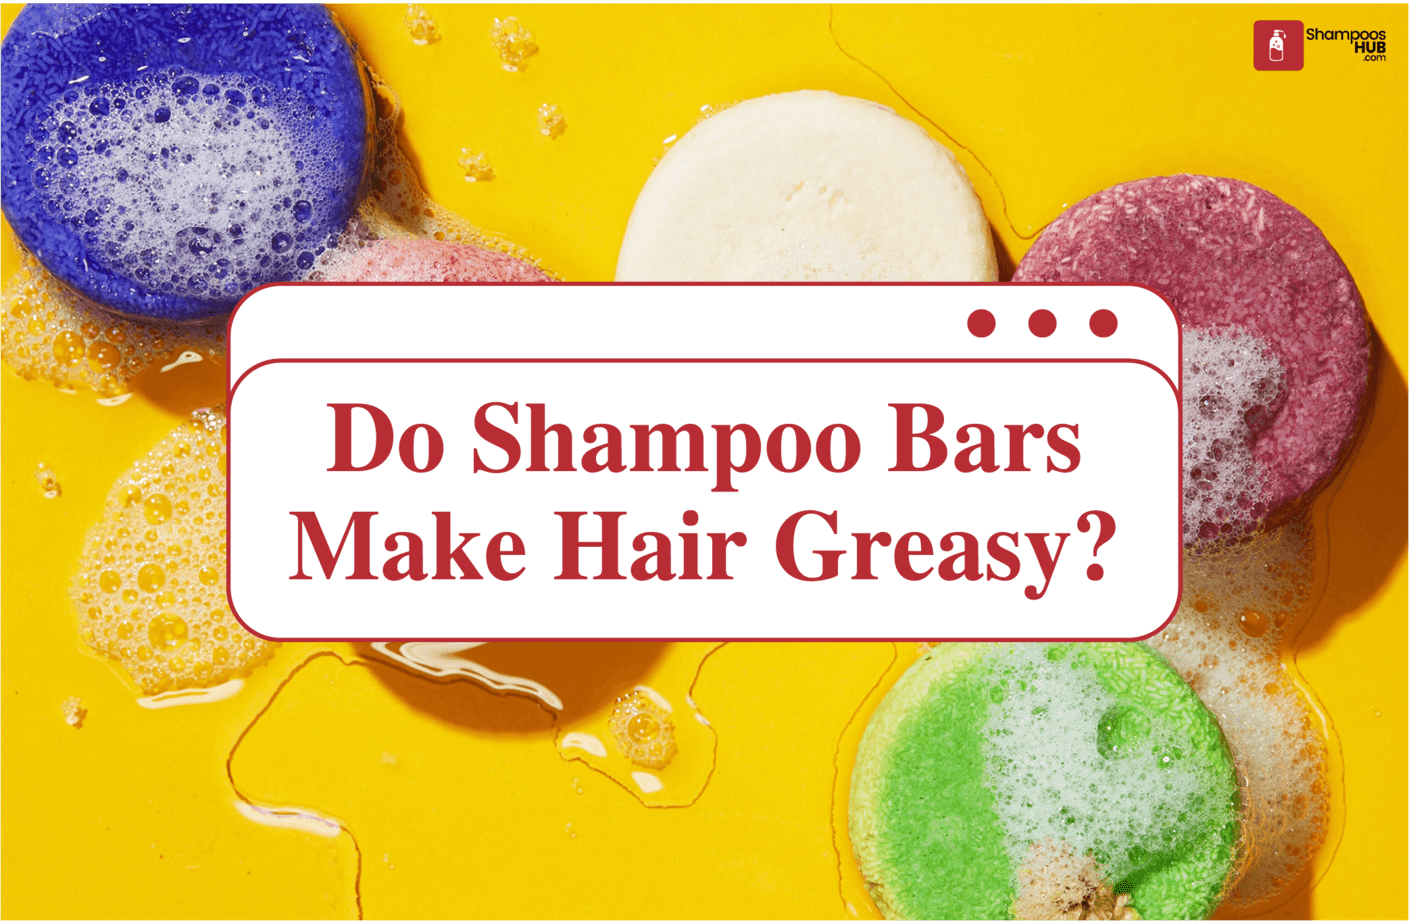 Do Shampoo Bars Make Hair Greasy?